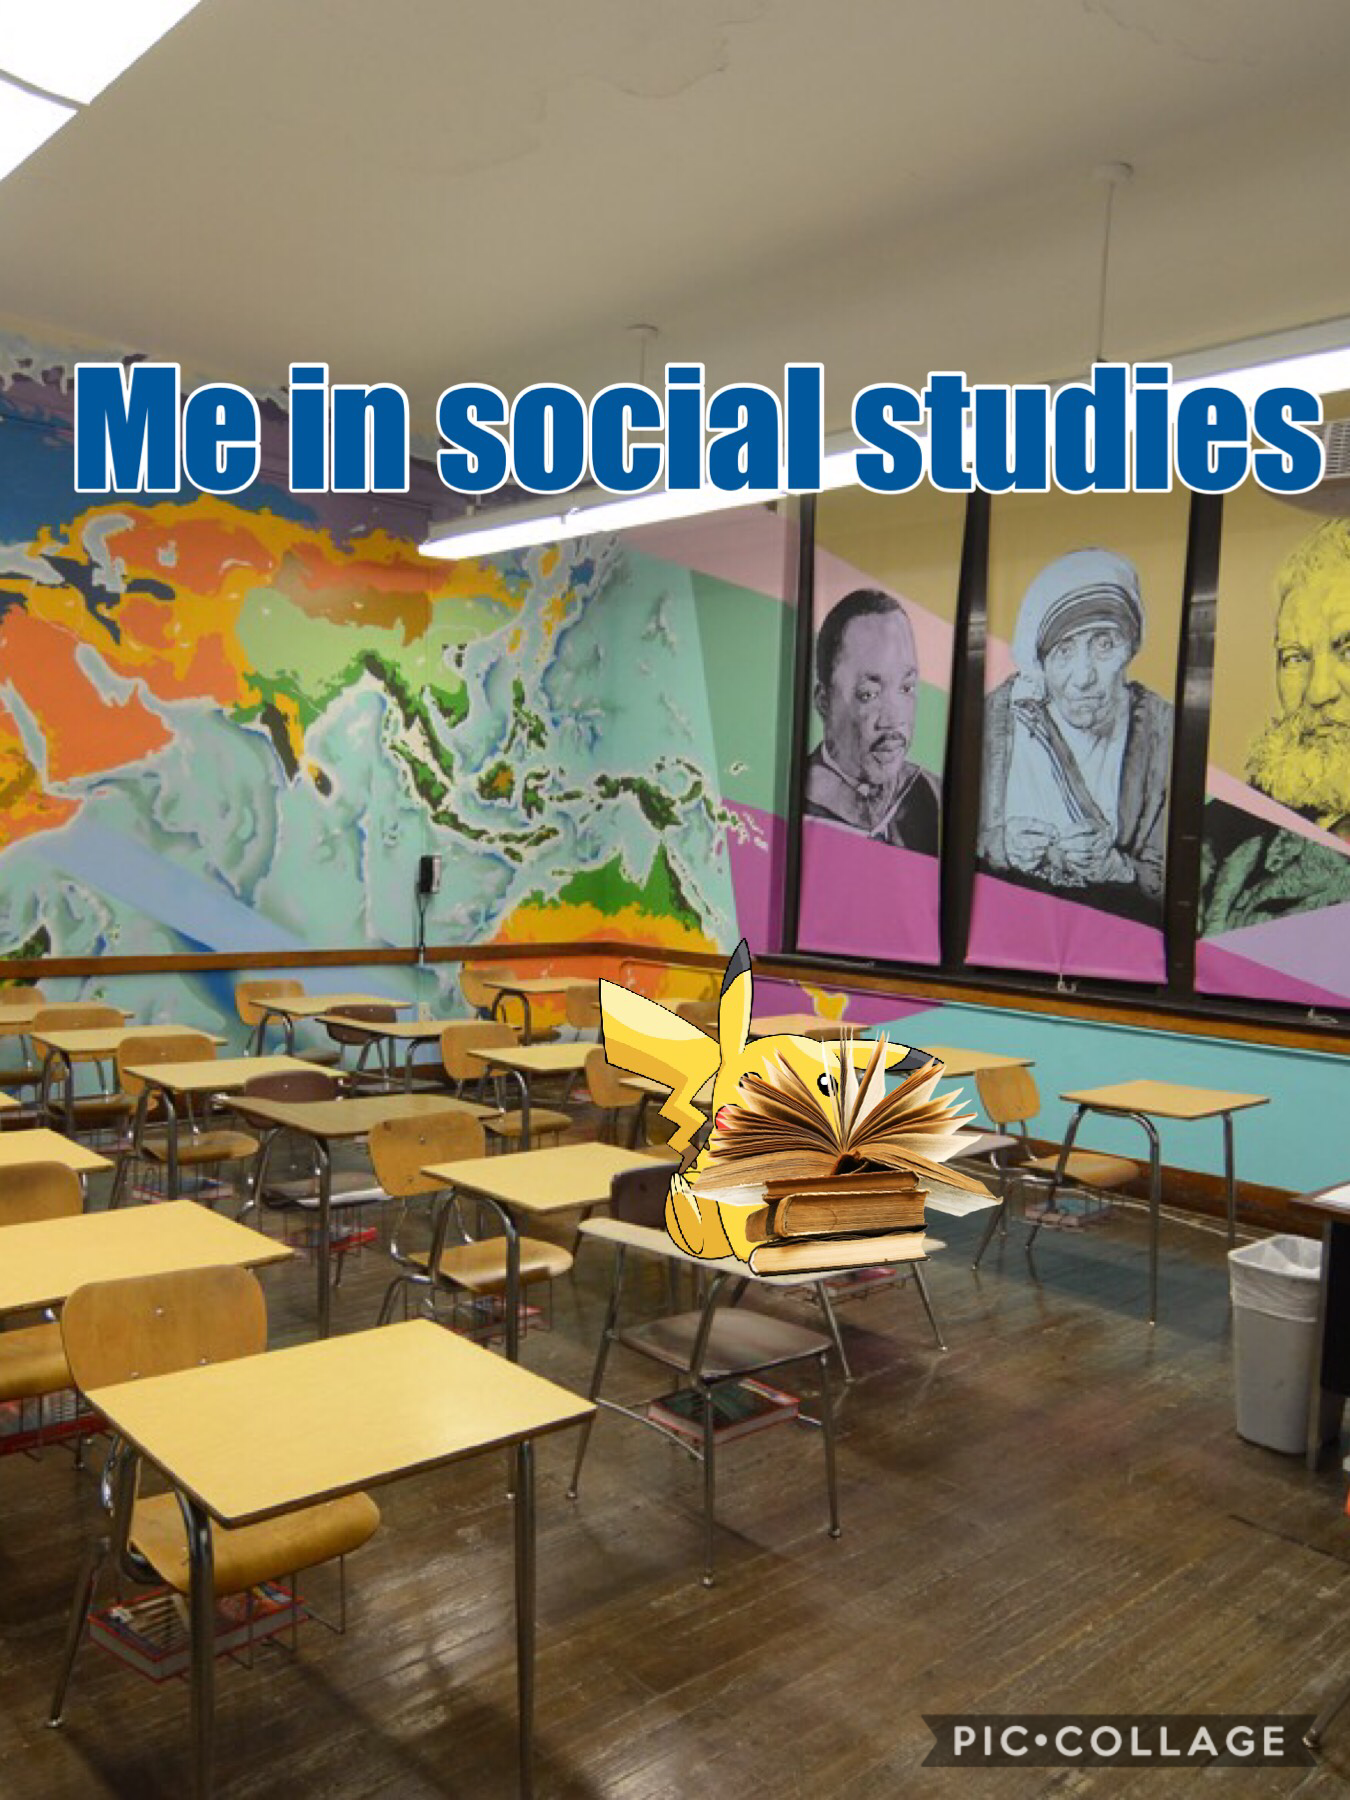 Social studies class